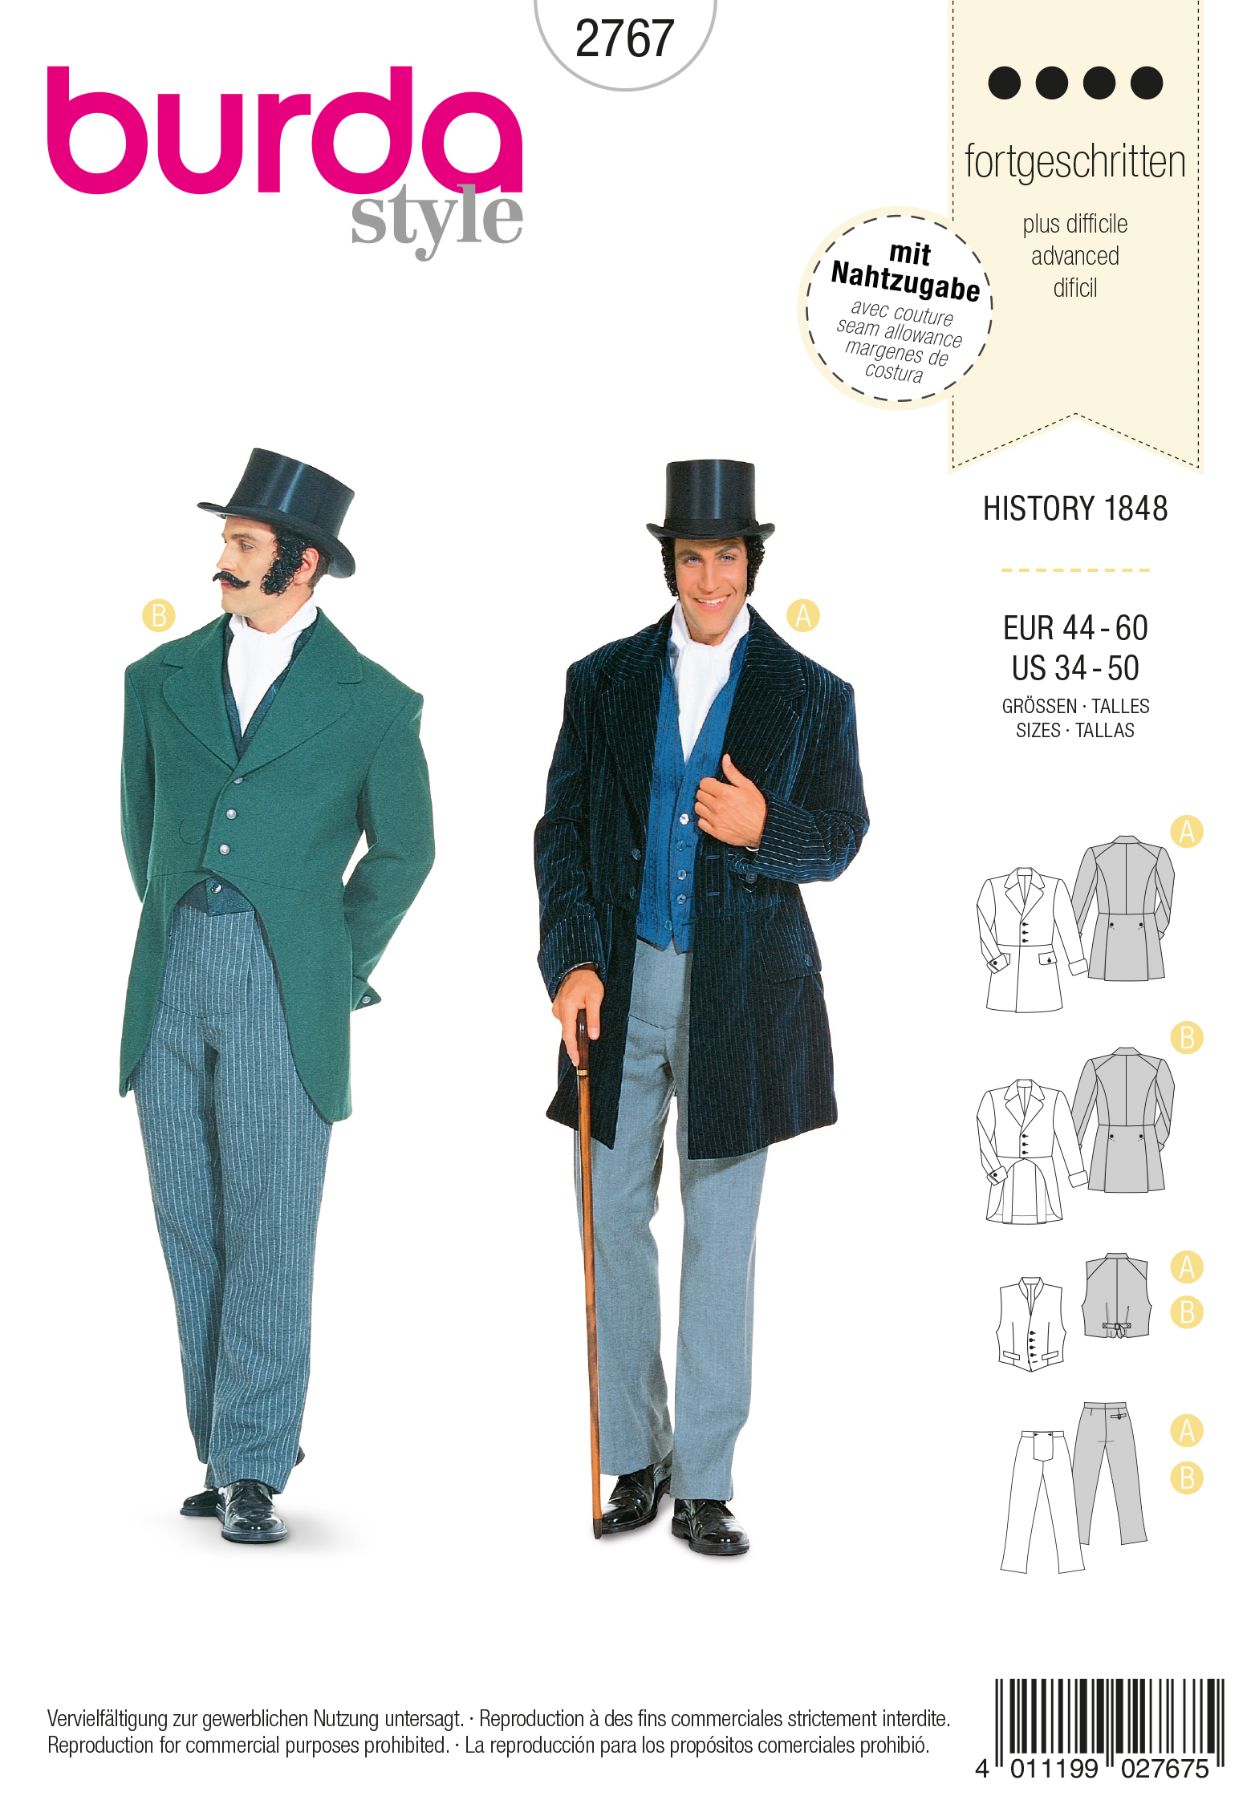 Burda Couture 2767 - Historisch kostuum uit 1848